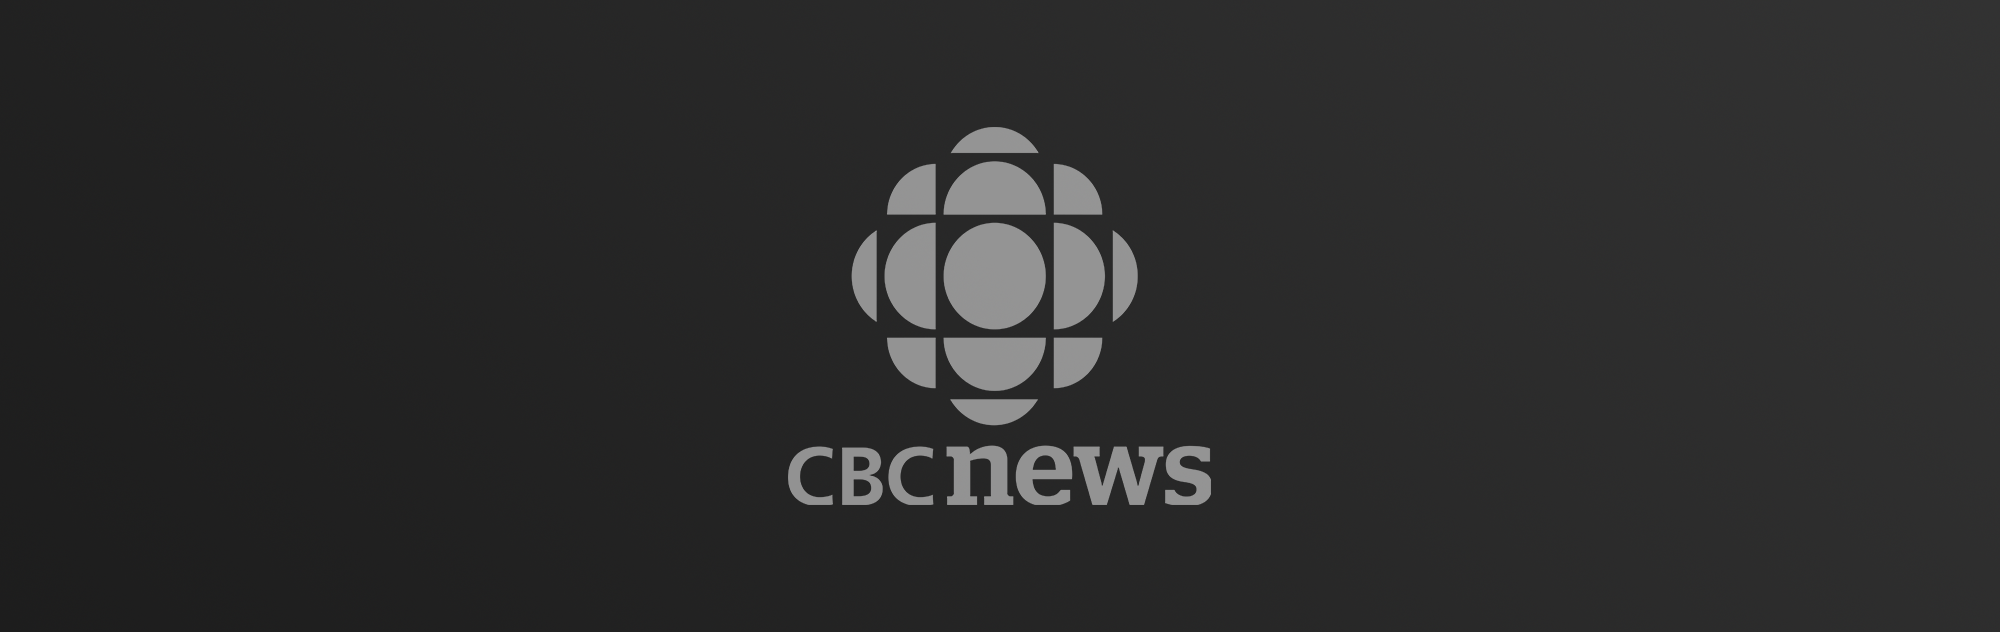 AGP-LLP_Media_CBC_News_Header